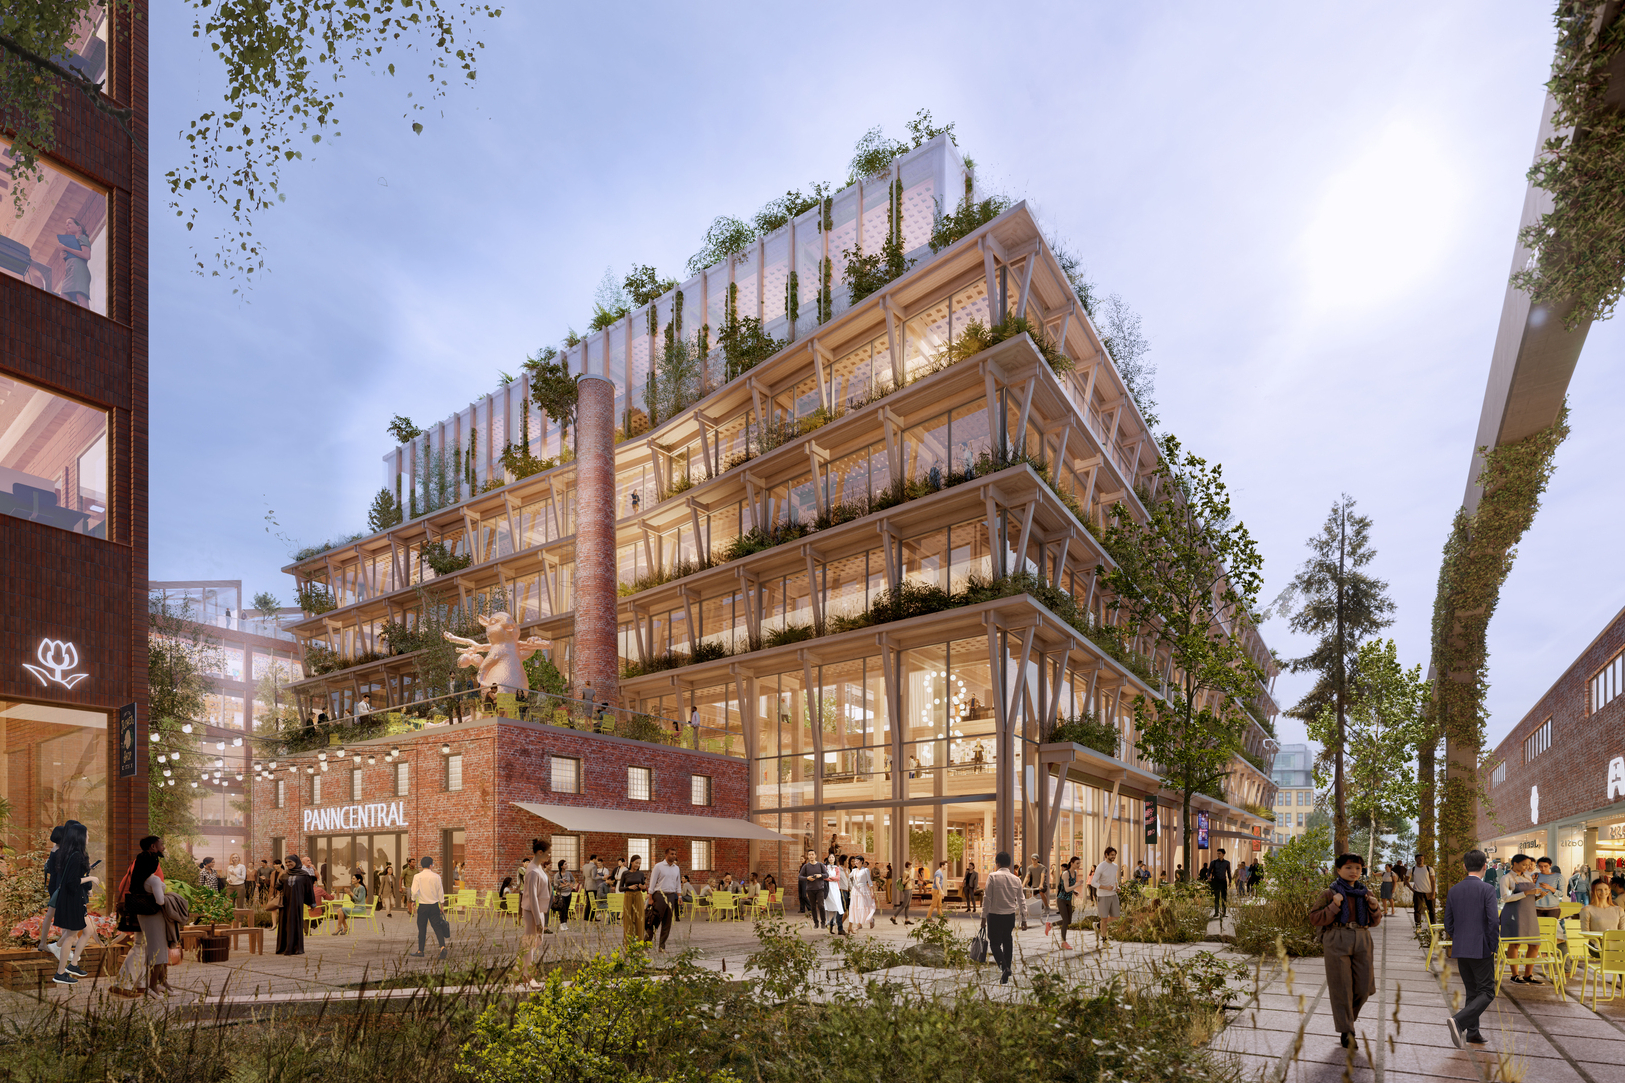 Stockholm Wood City 特別以大量的綠化景觀設計，創造清新宜人的城市氛圍。